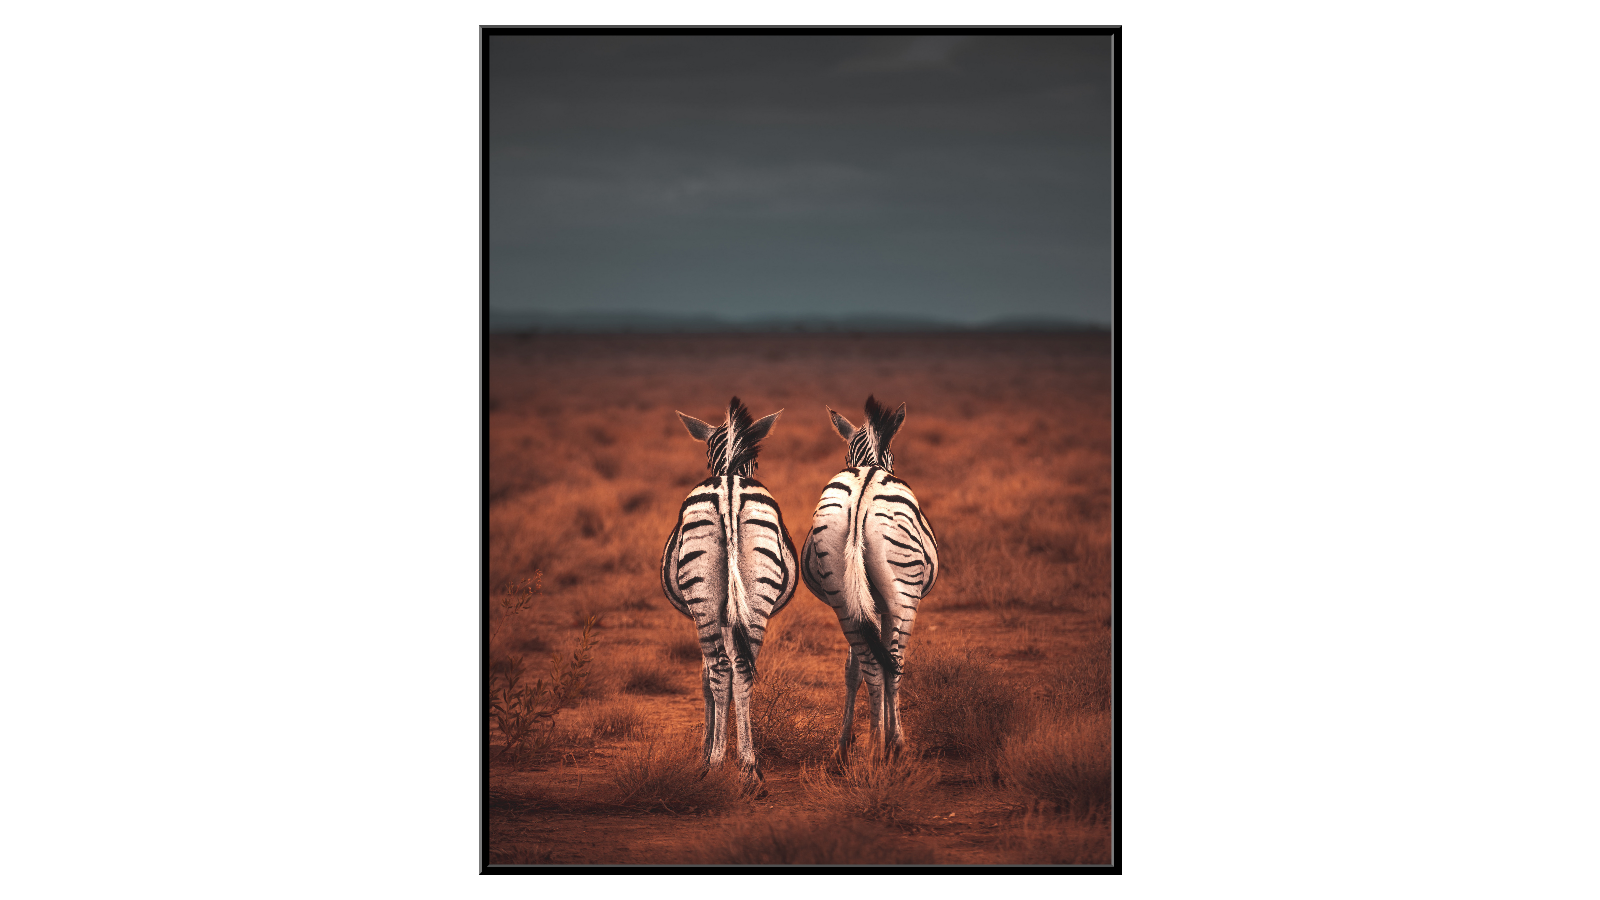 A pair of walking zebras